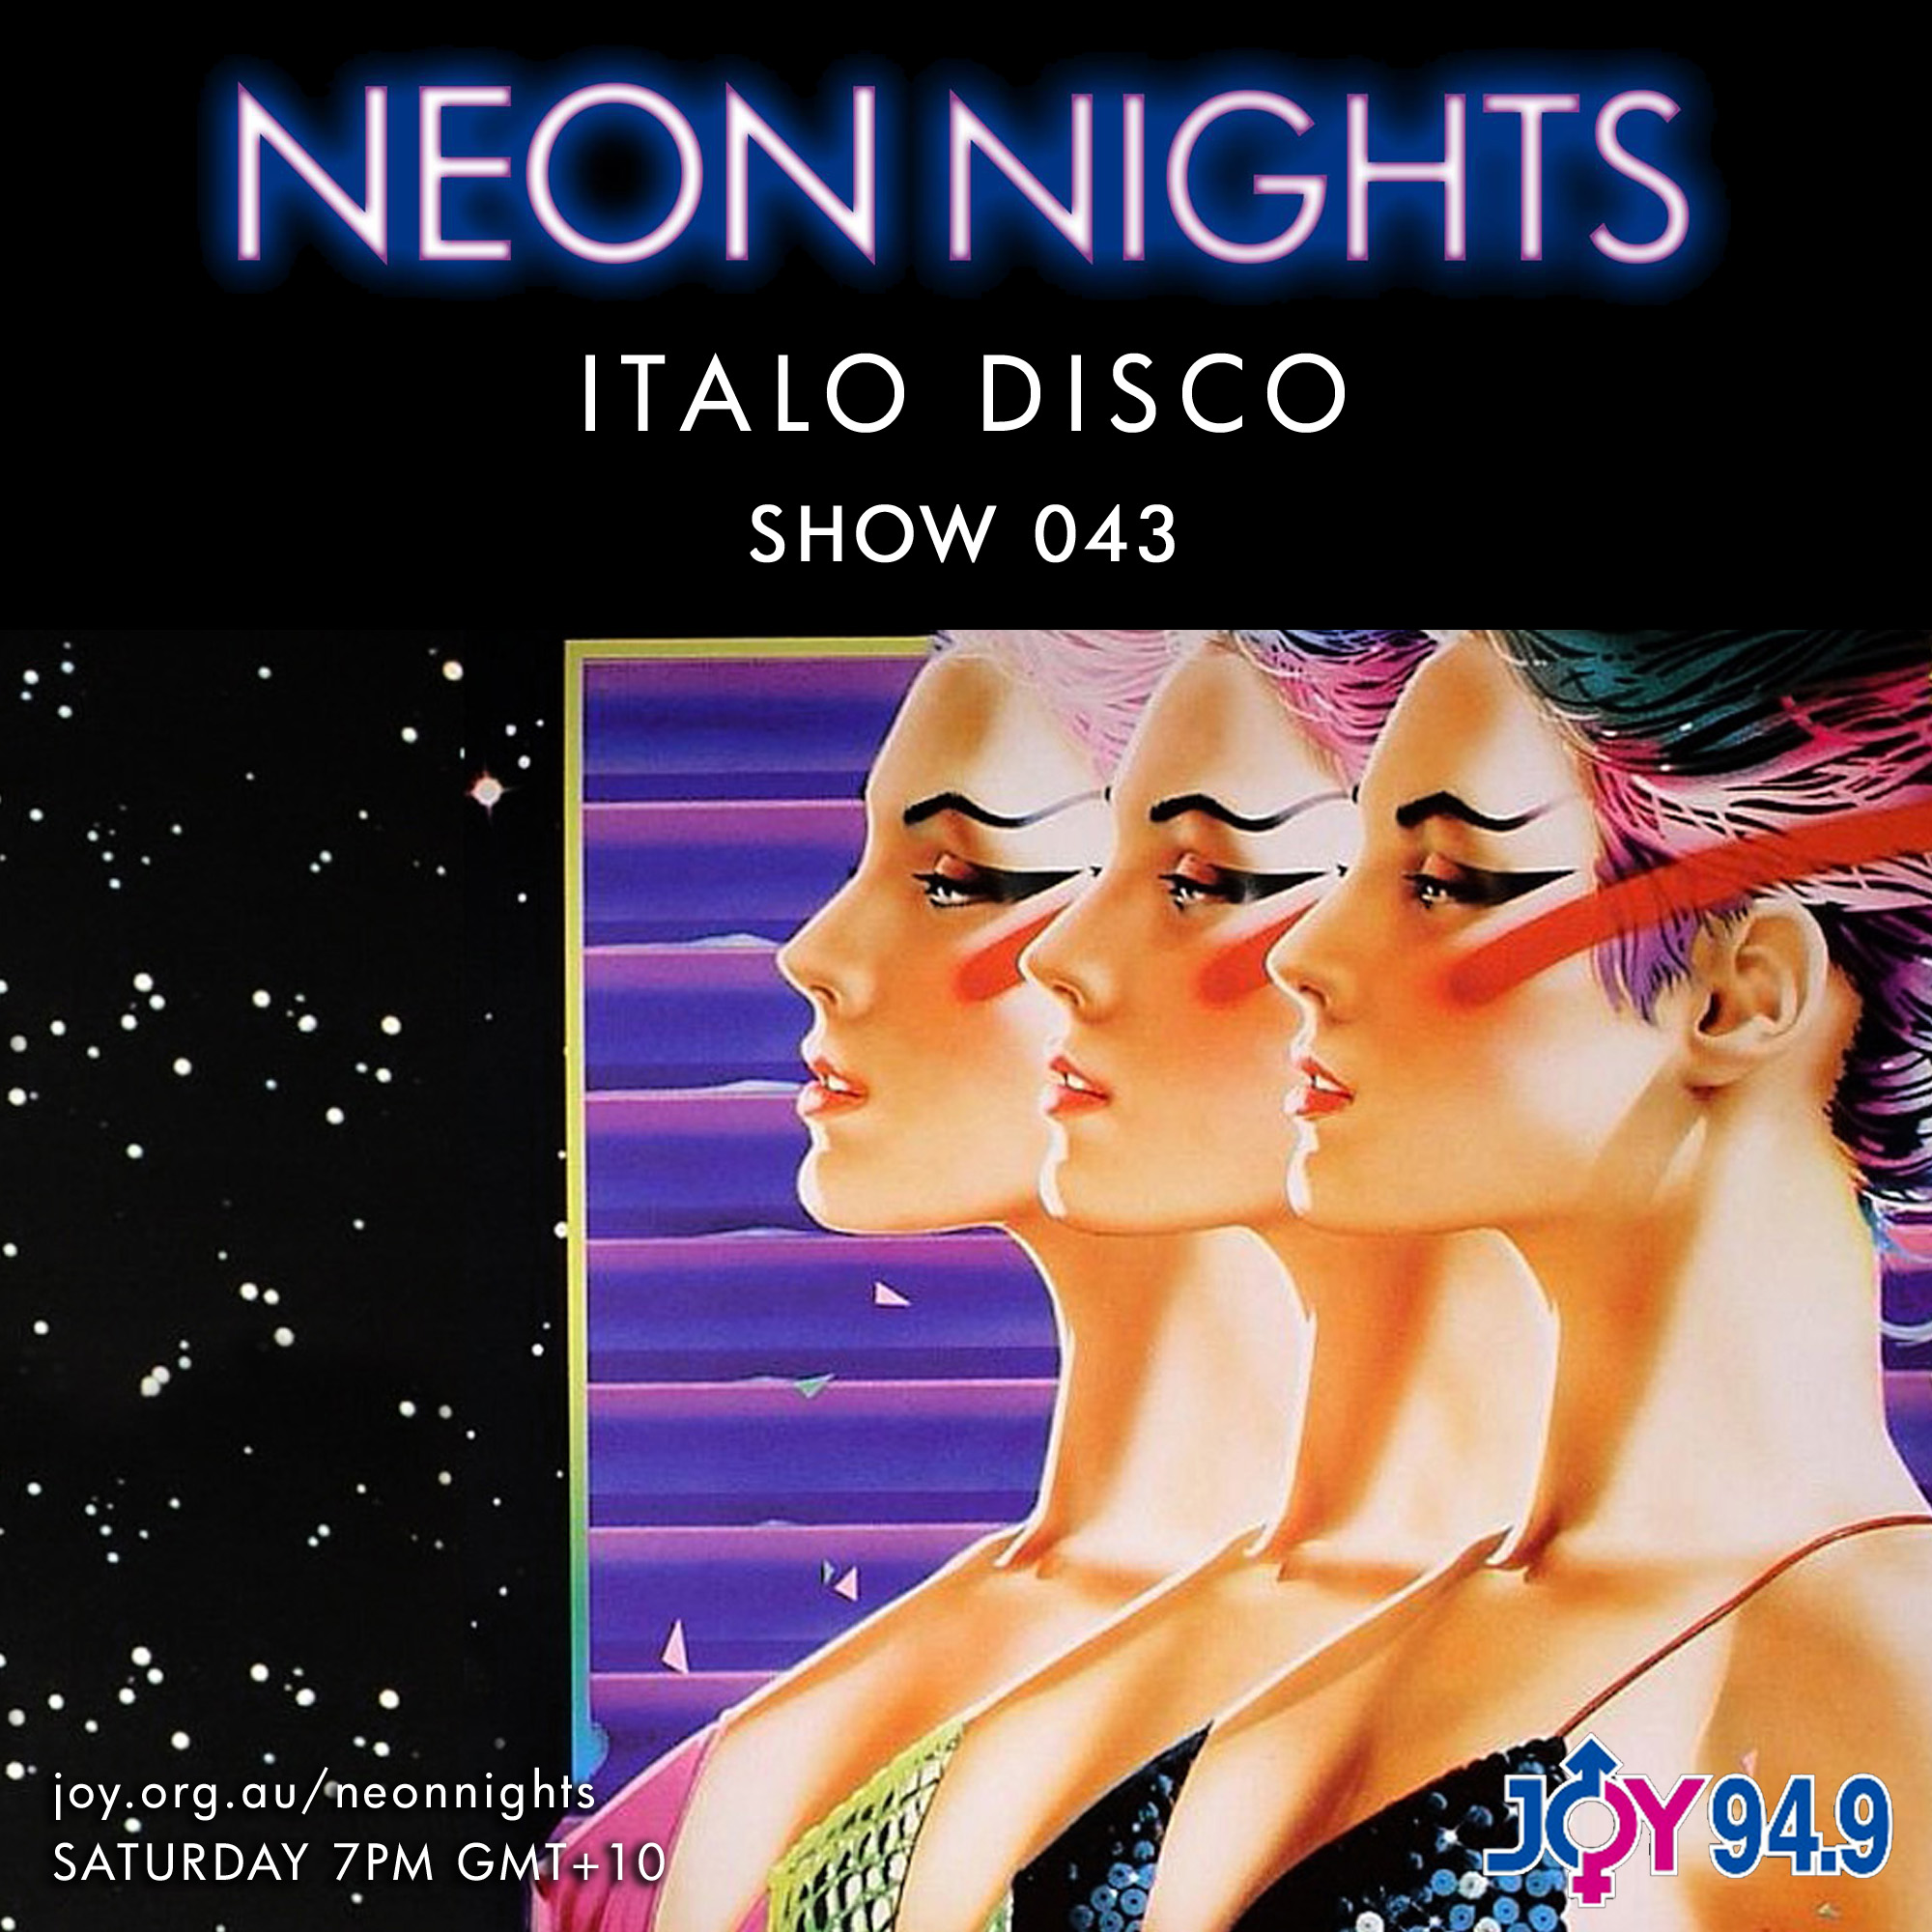 Show 043 / Italo Disco Neon Nights